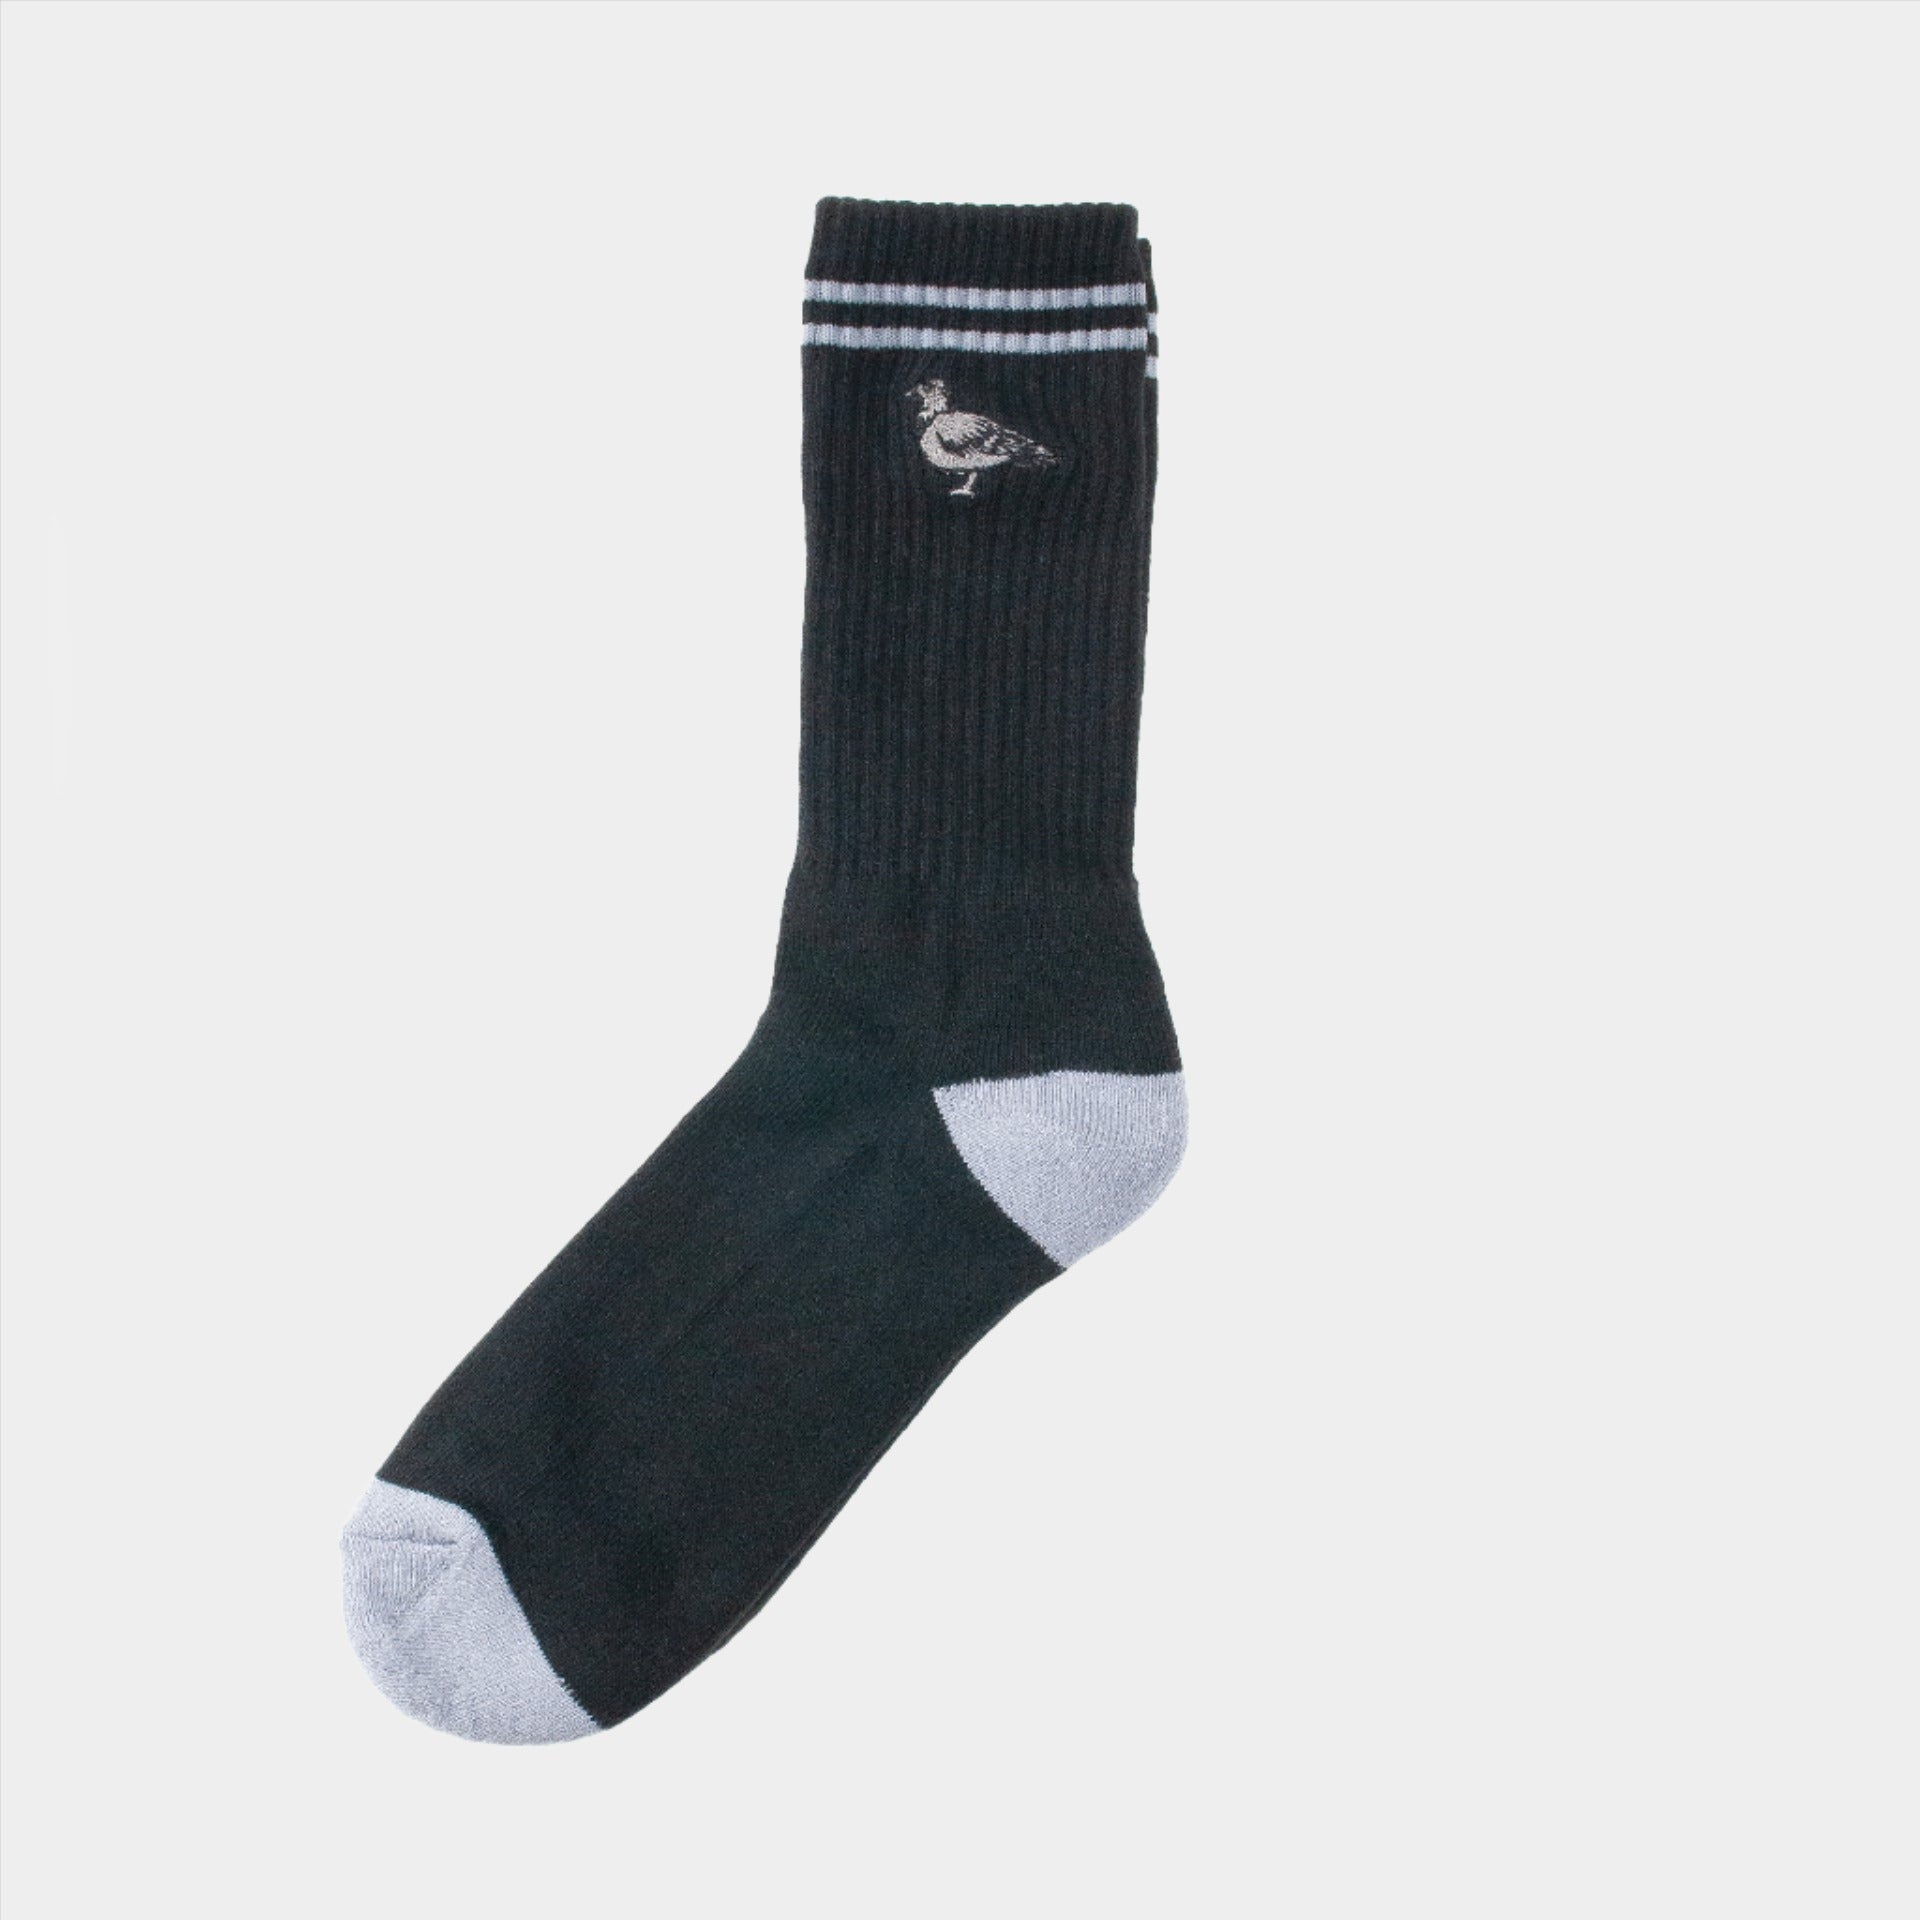 Anti Hero Basic Pidgeon Embroidered Socks - Black/ Grey - Prime Delux Store